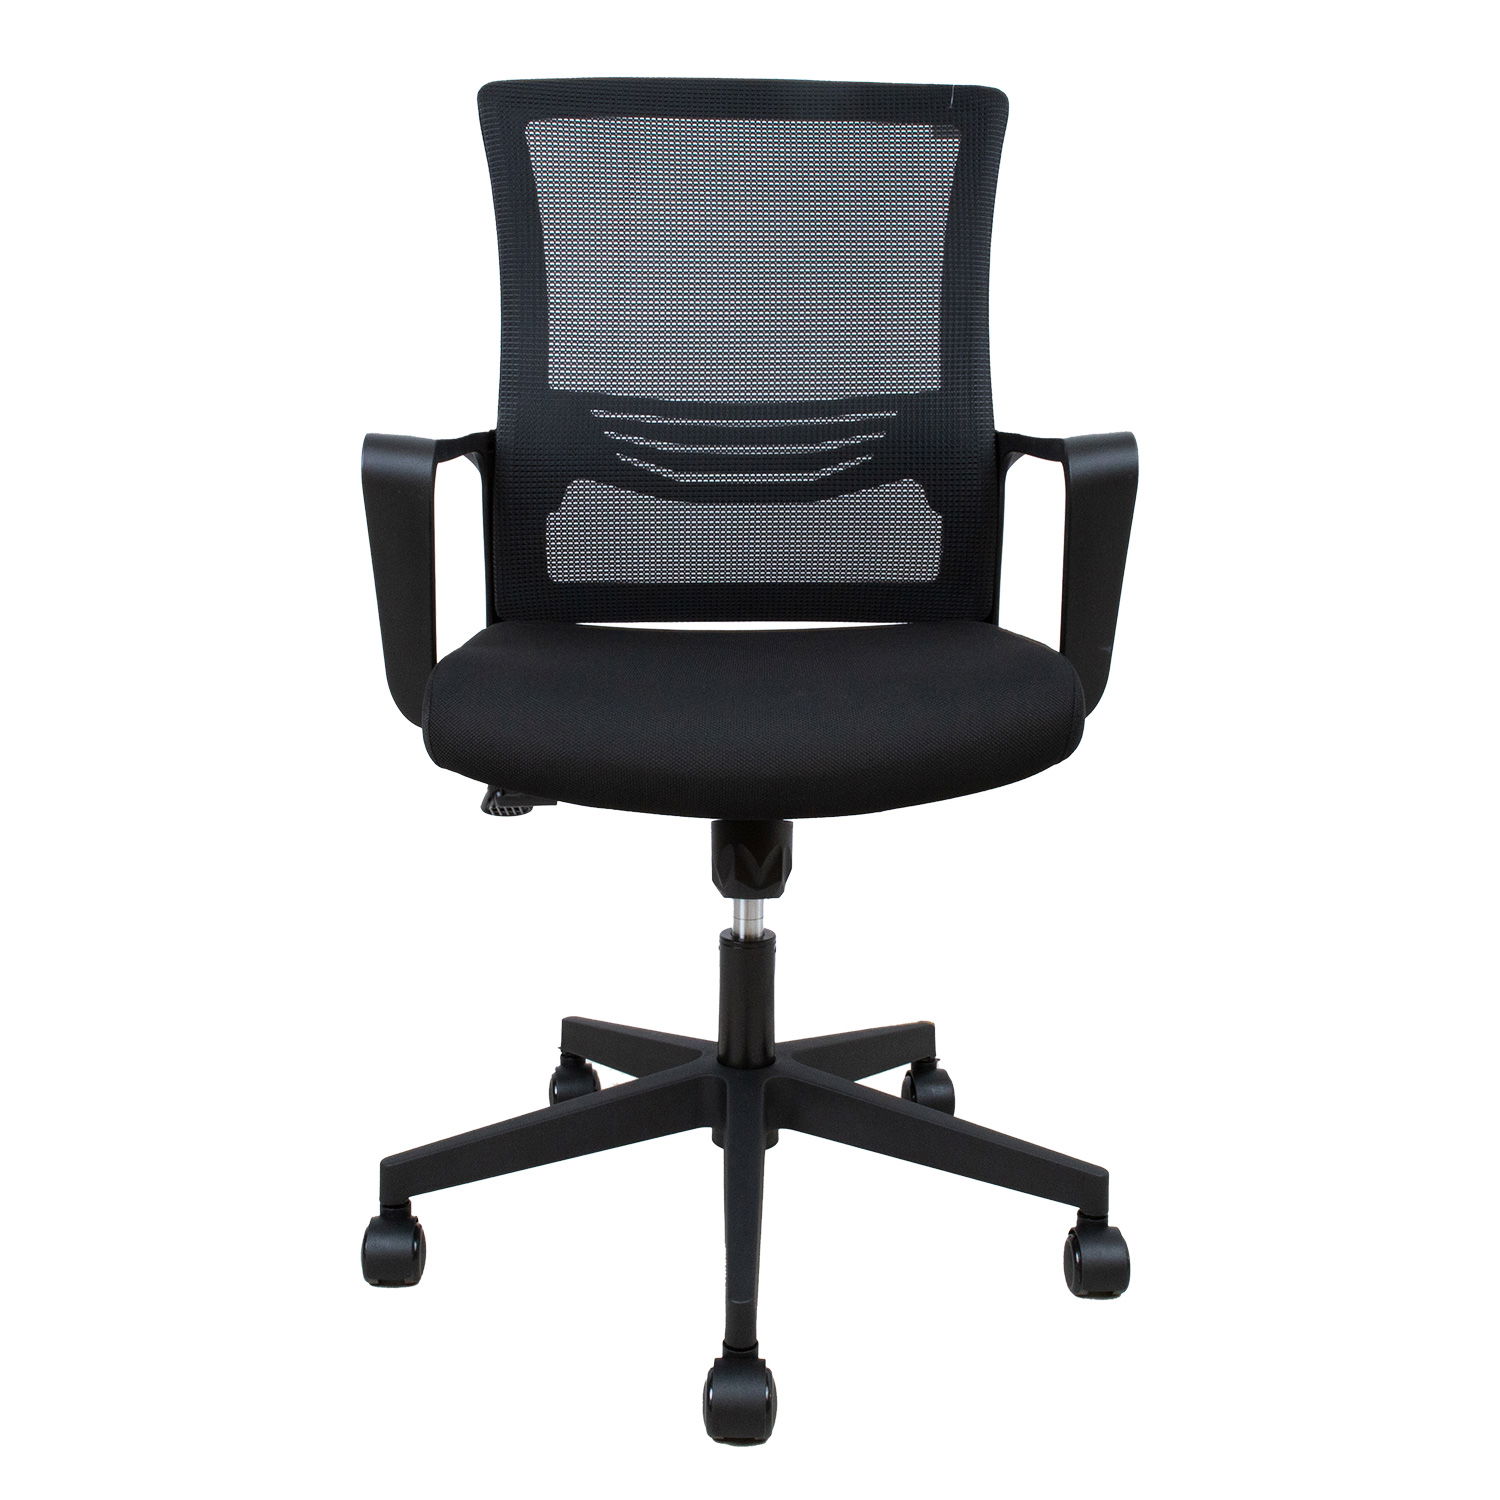 Biuro kėdė EMMA, 57x65x98-104 cm, juoda-1